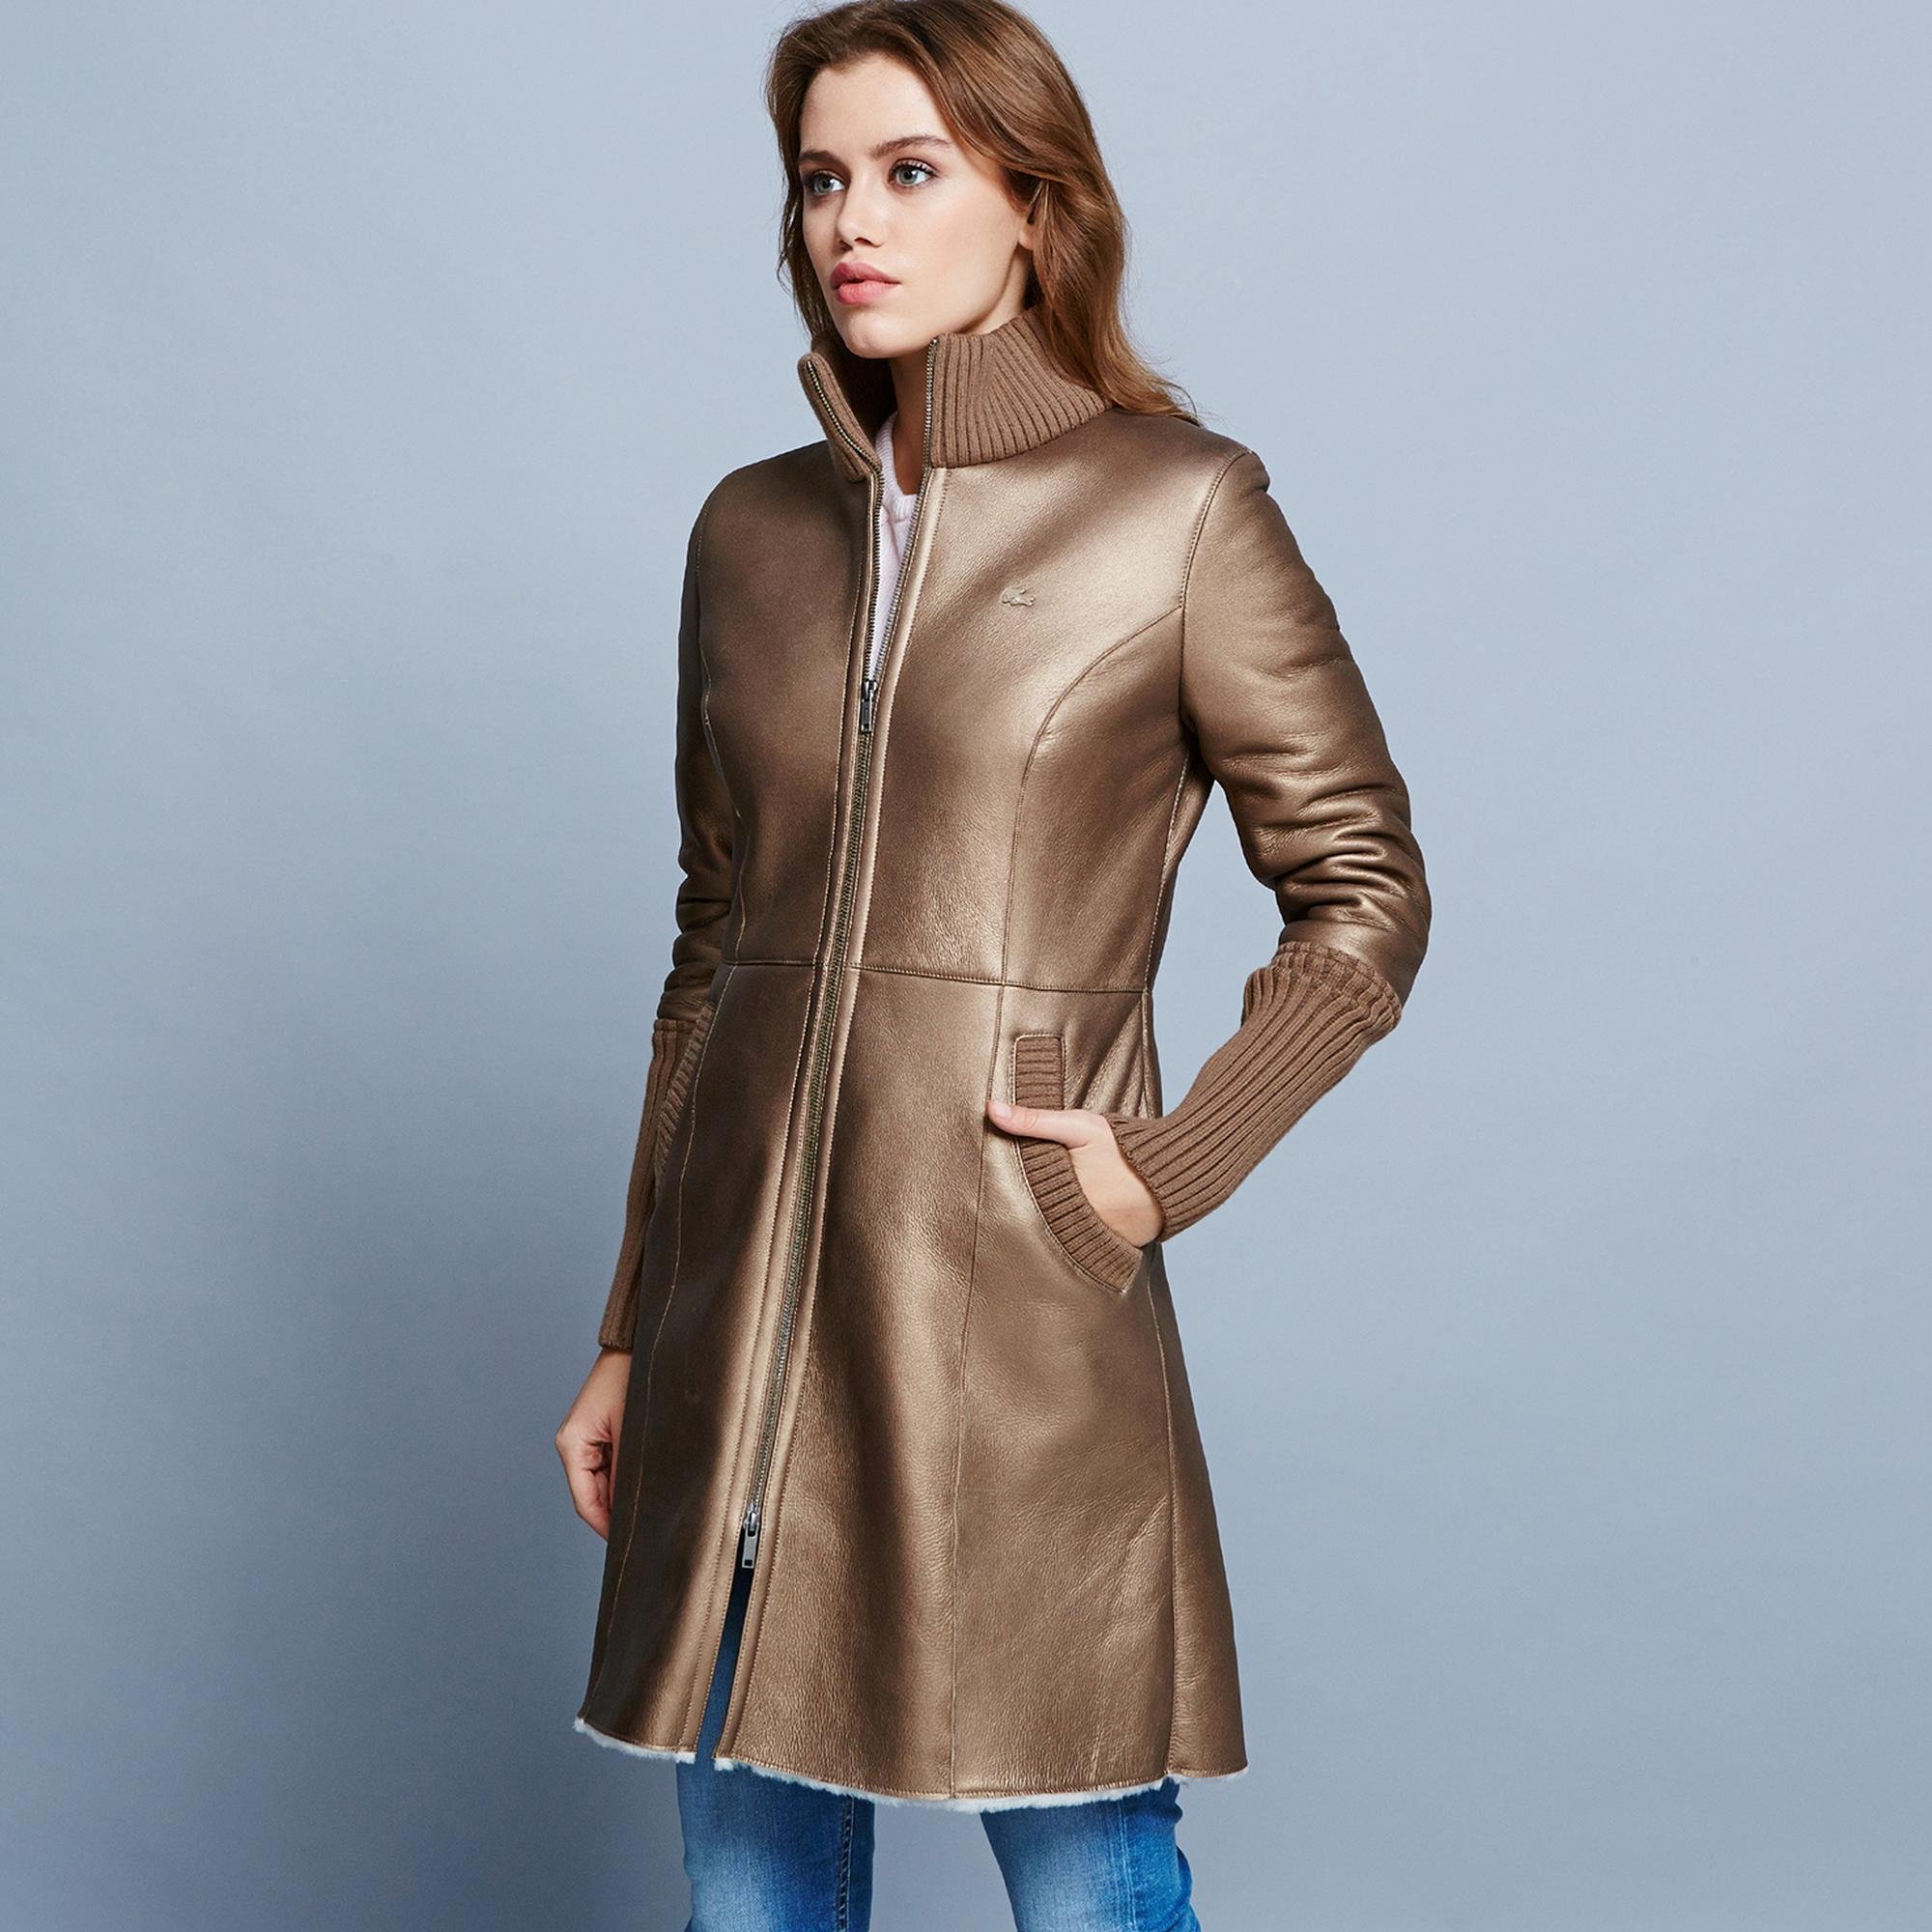 Lacoste Women's Coat